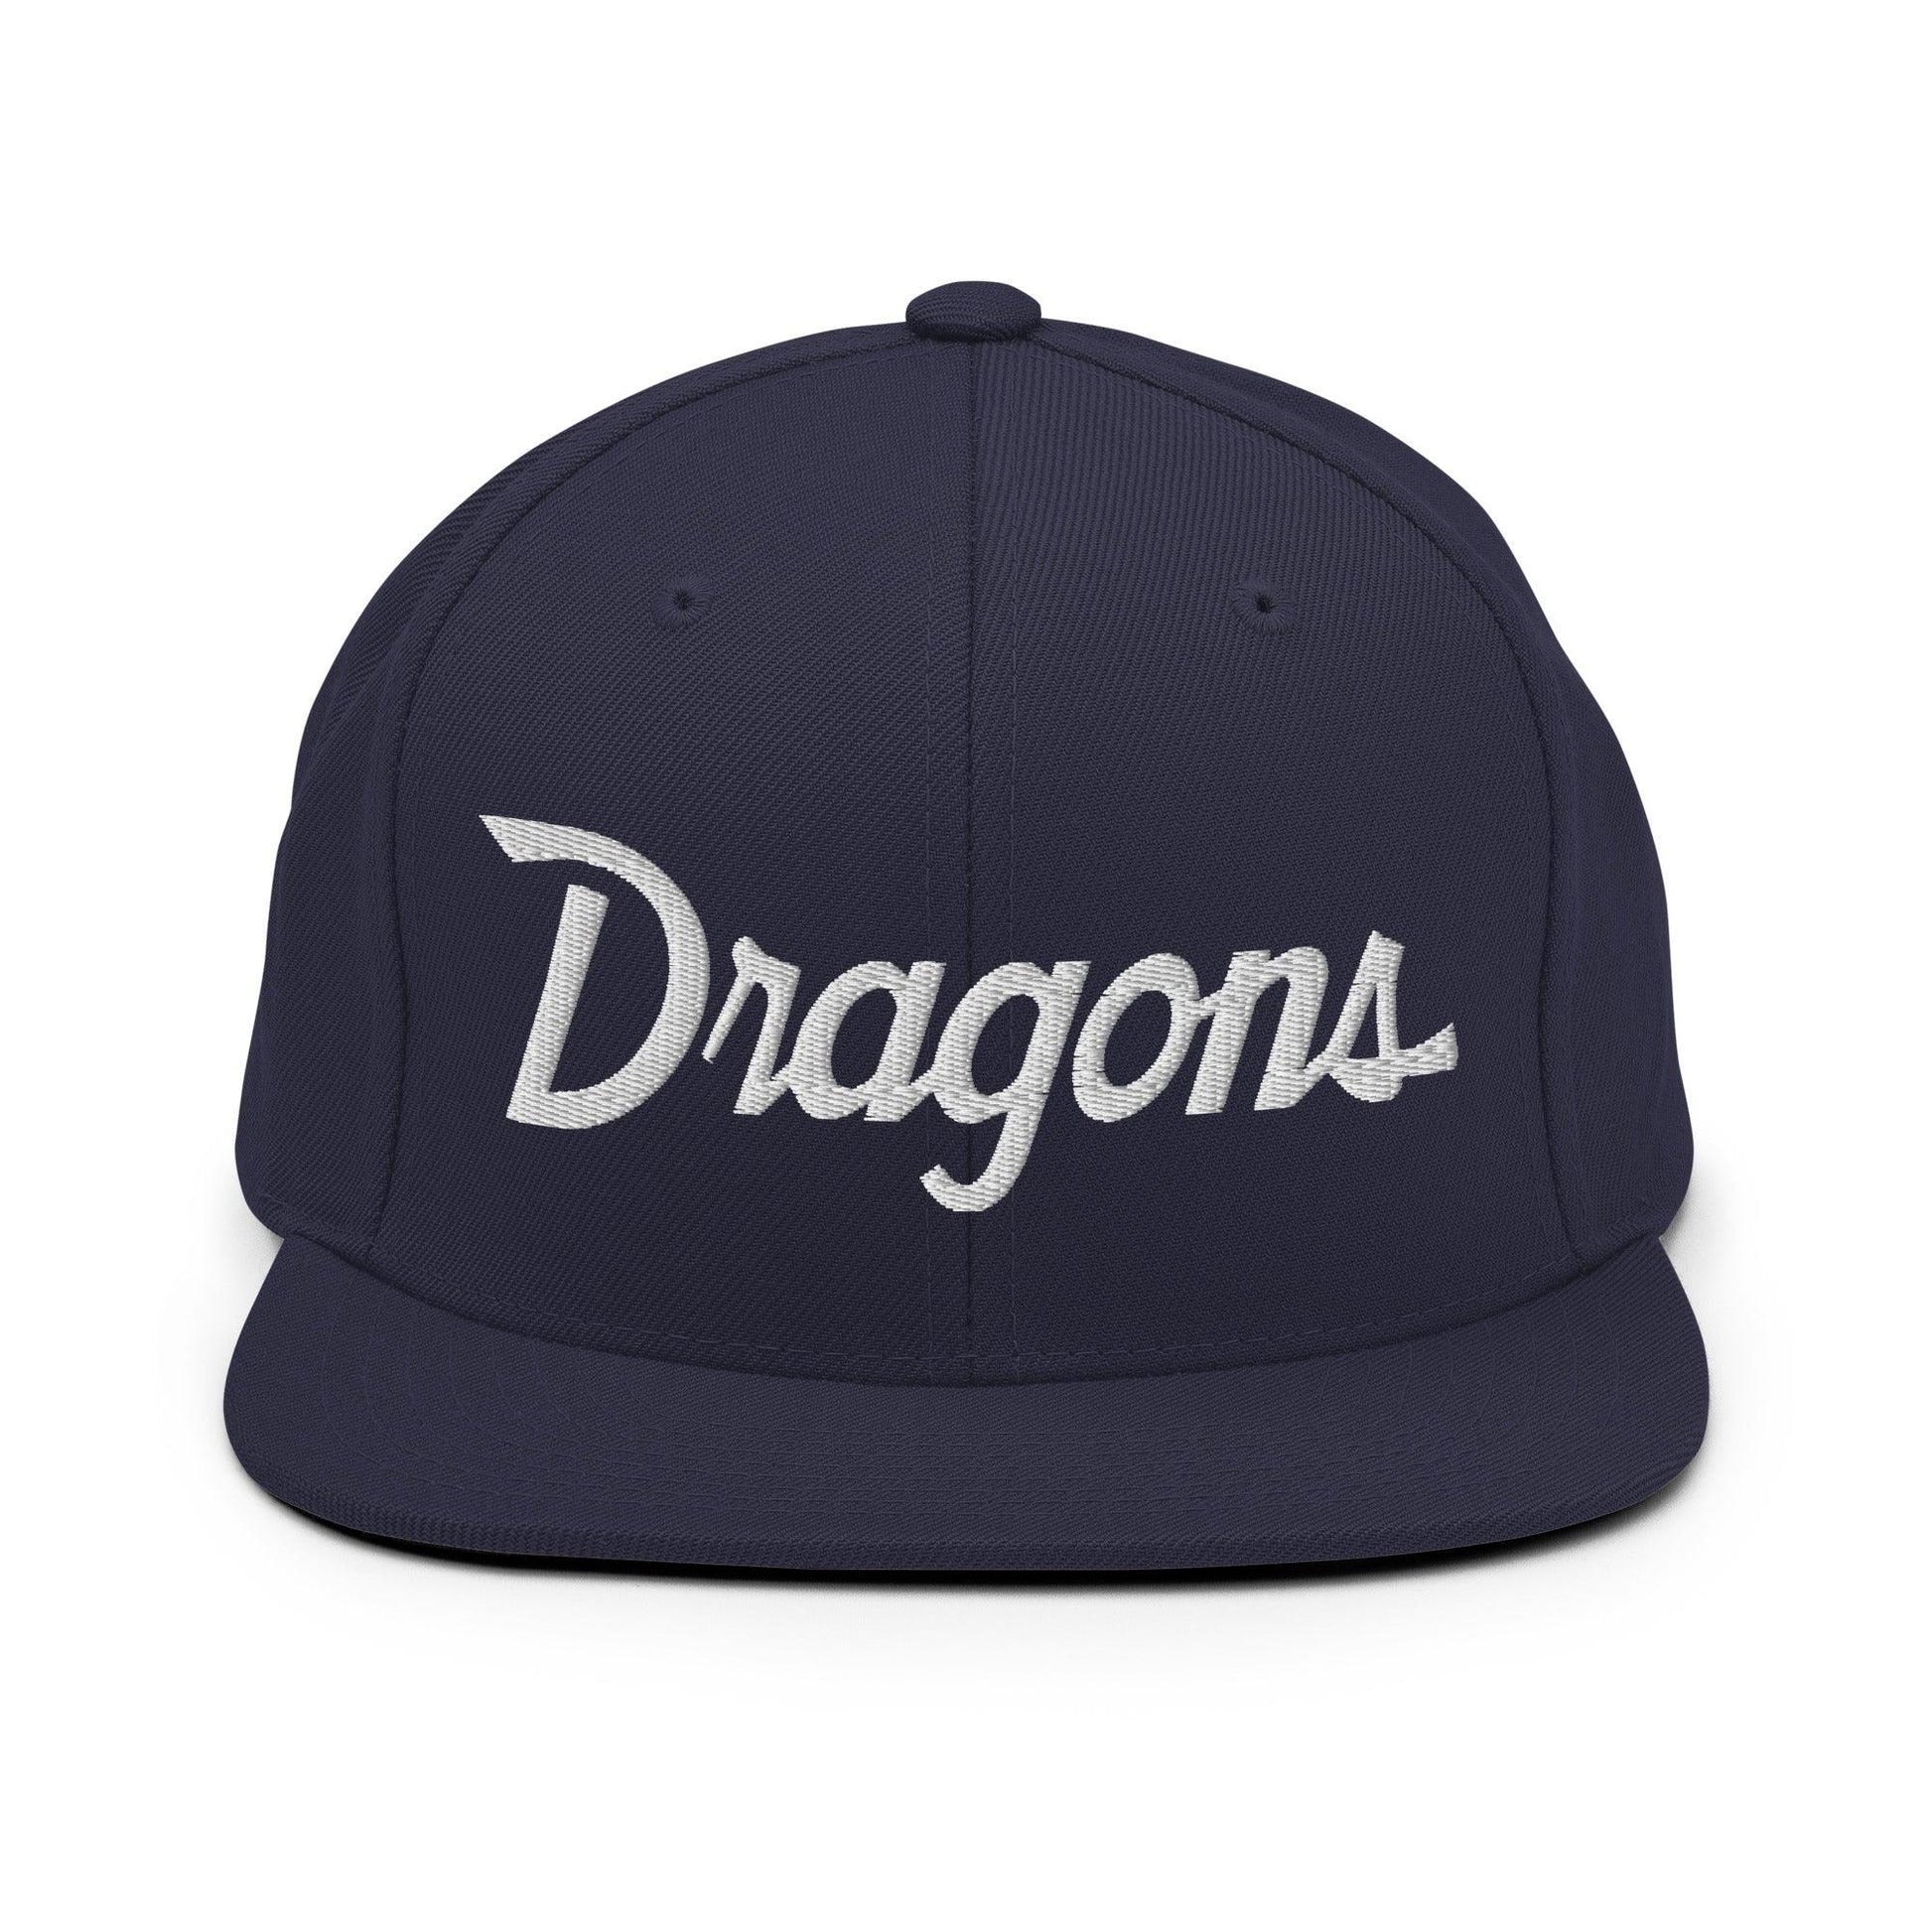 Dragons School Mascot Snapback Hat Navy